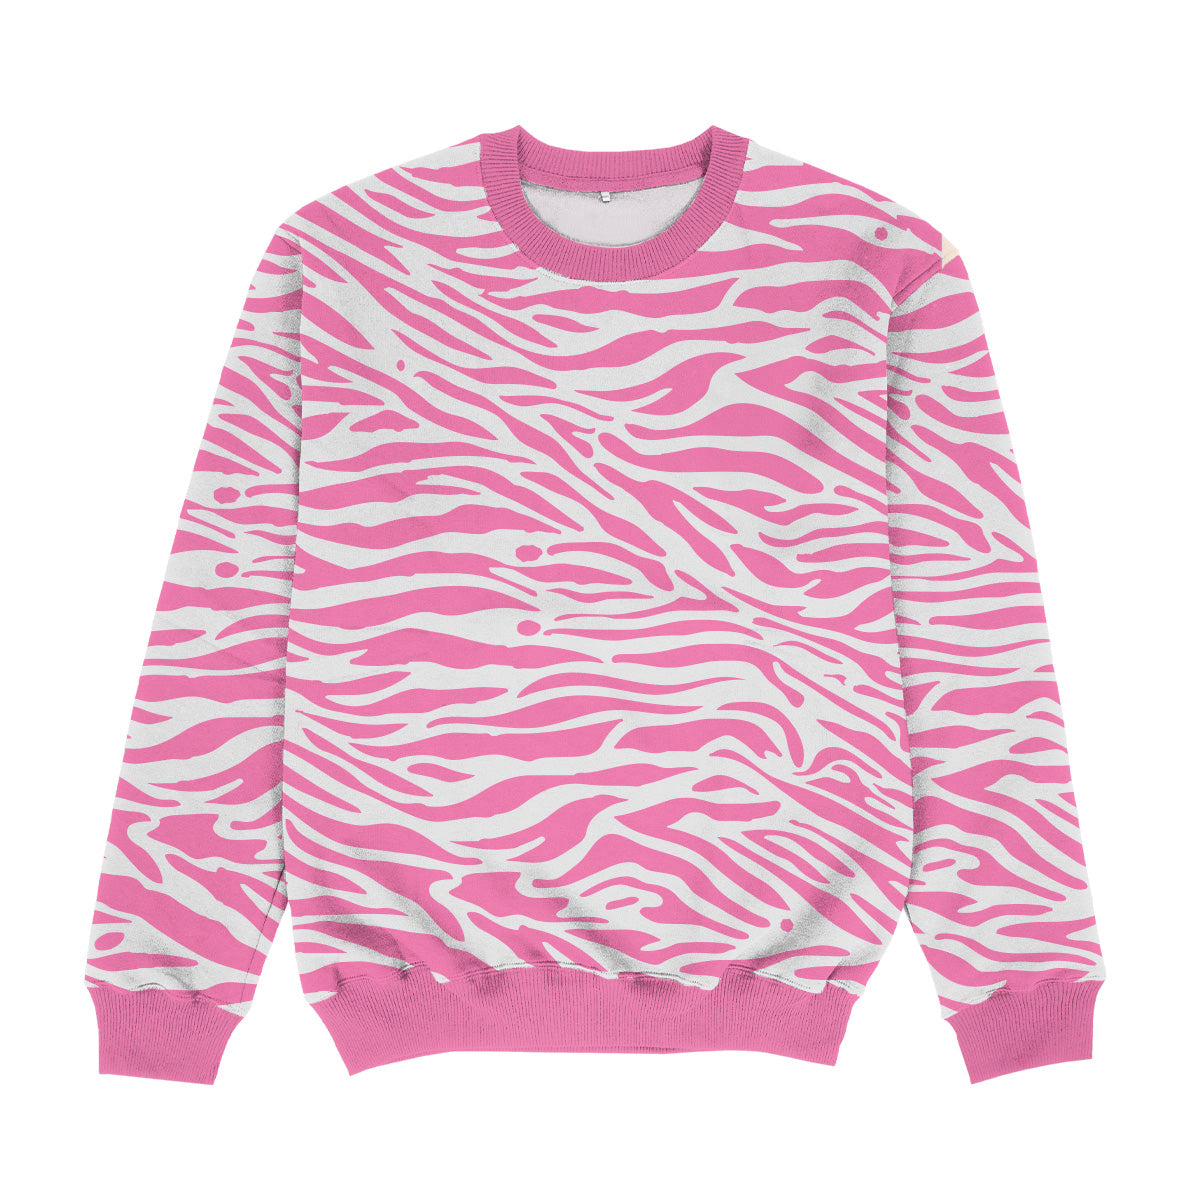 Animal Print Pink and White Crewneck Sweatshirt